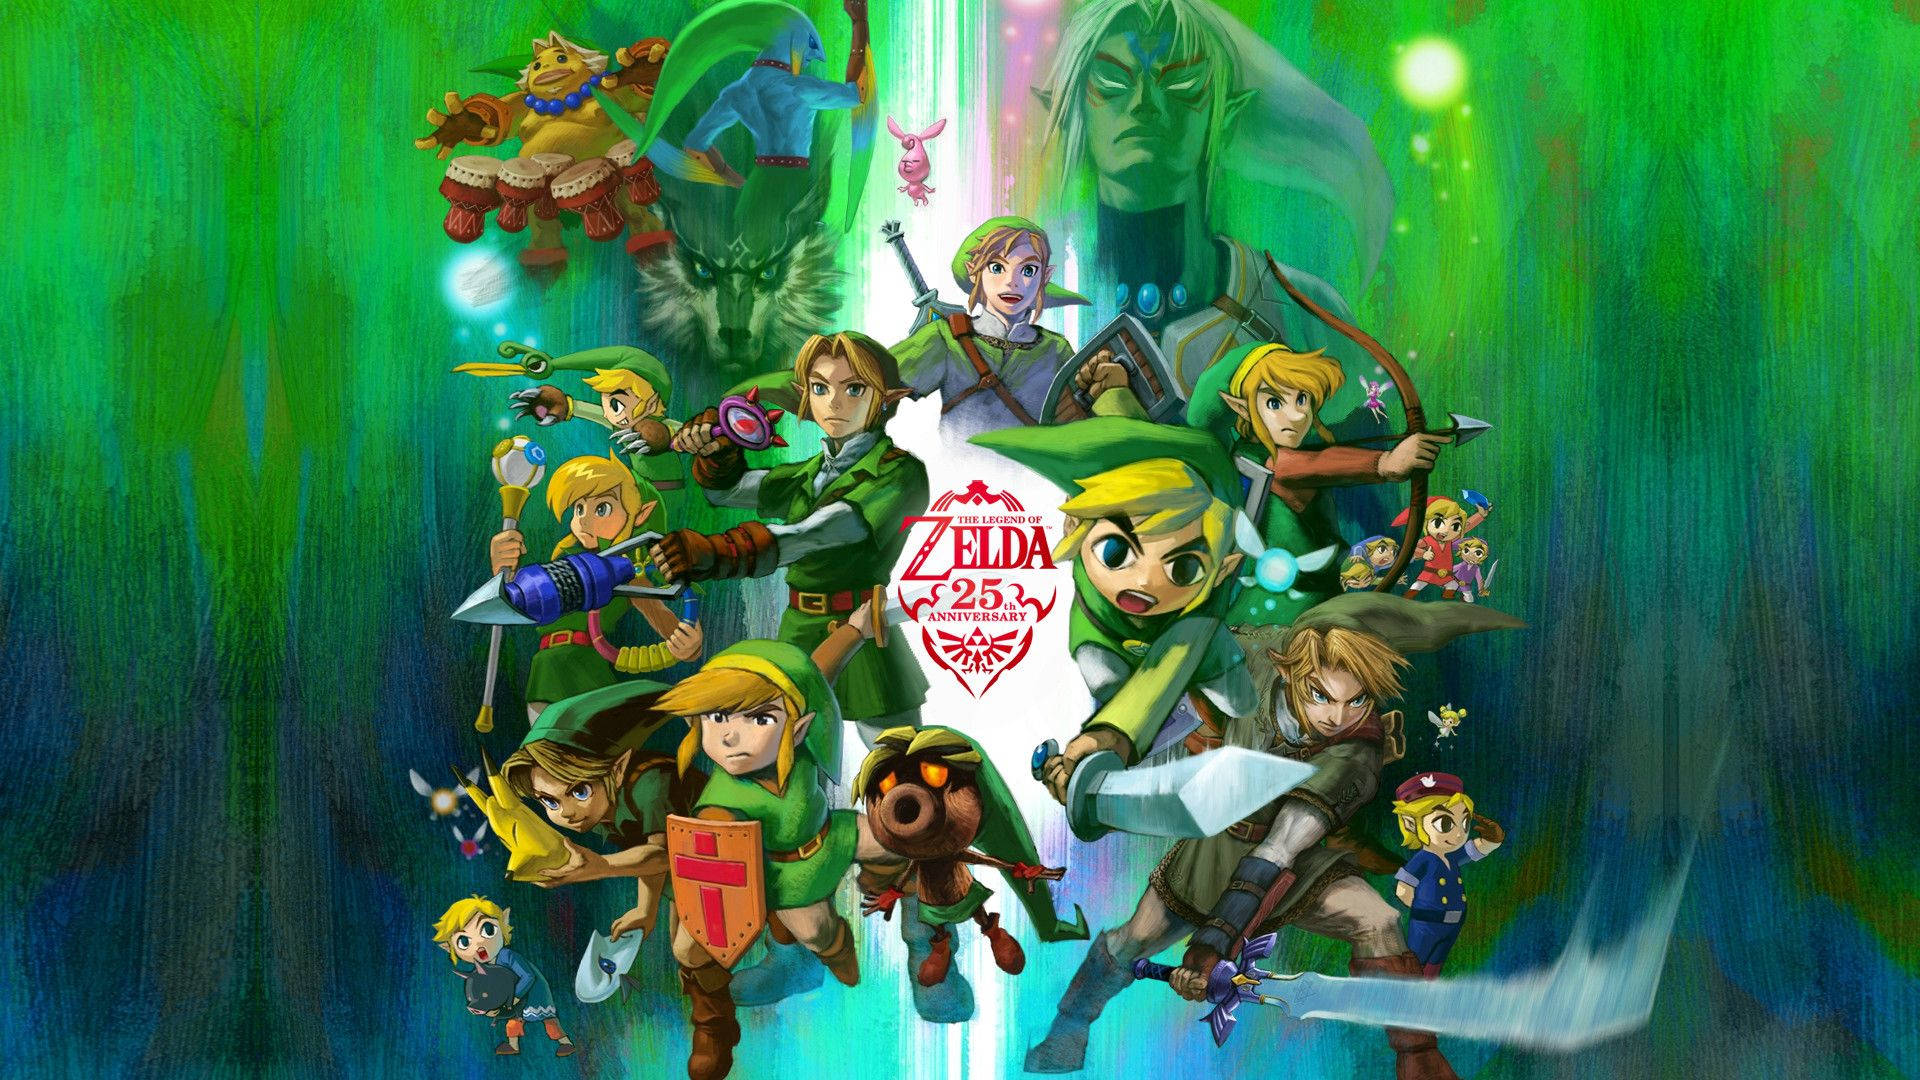 Free Legend Of Zelda Wallpaper Downloads, Legend Of Zelda Wallpaper for FREE